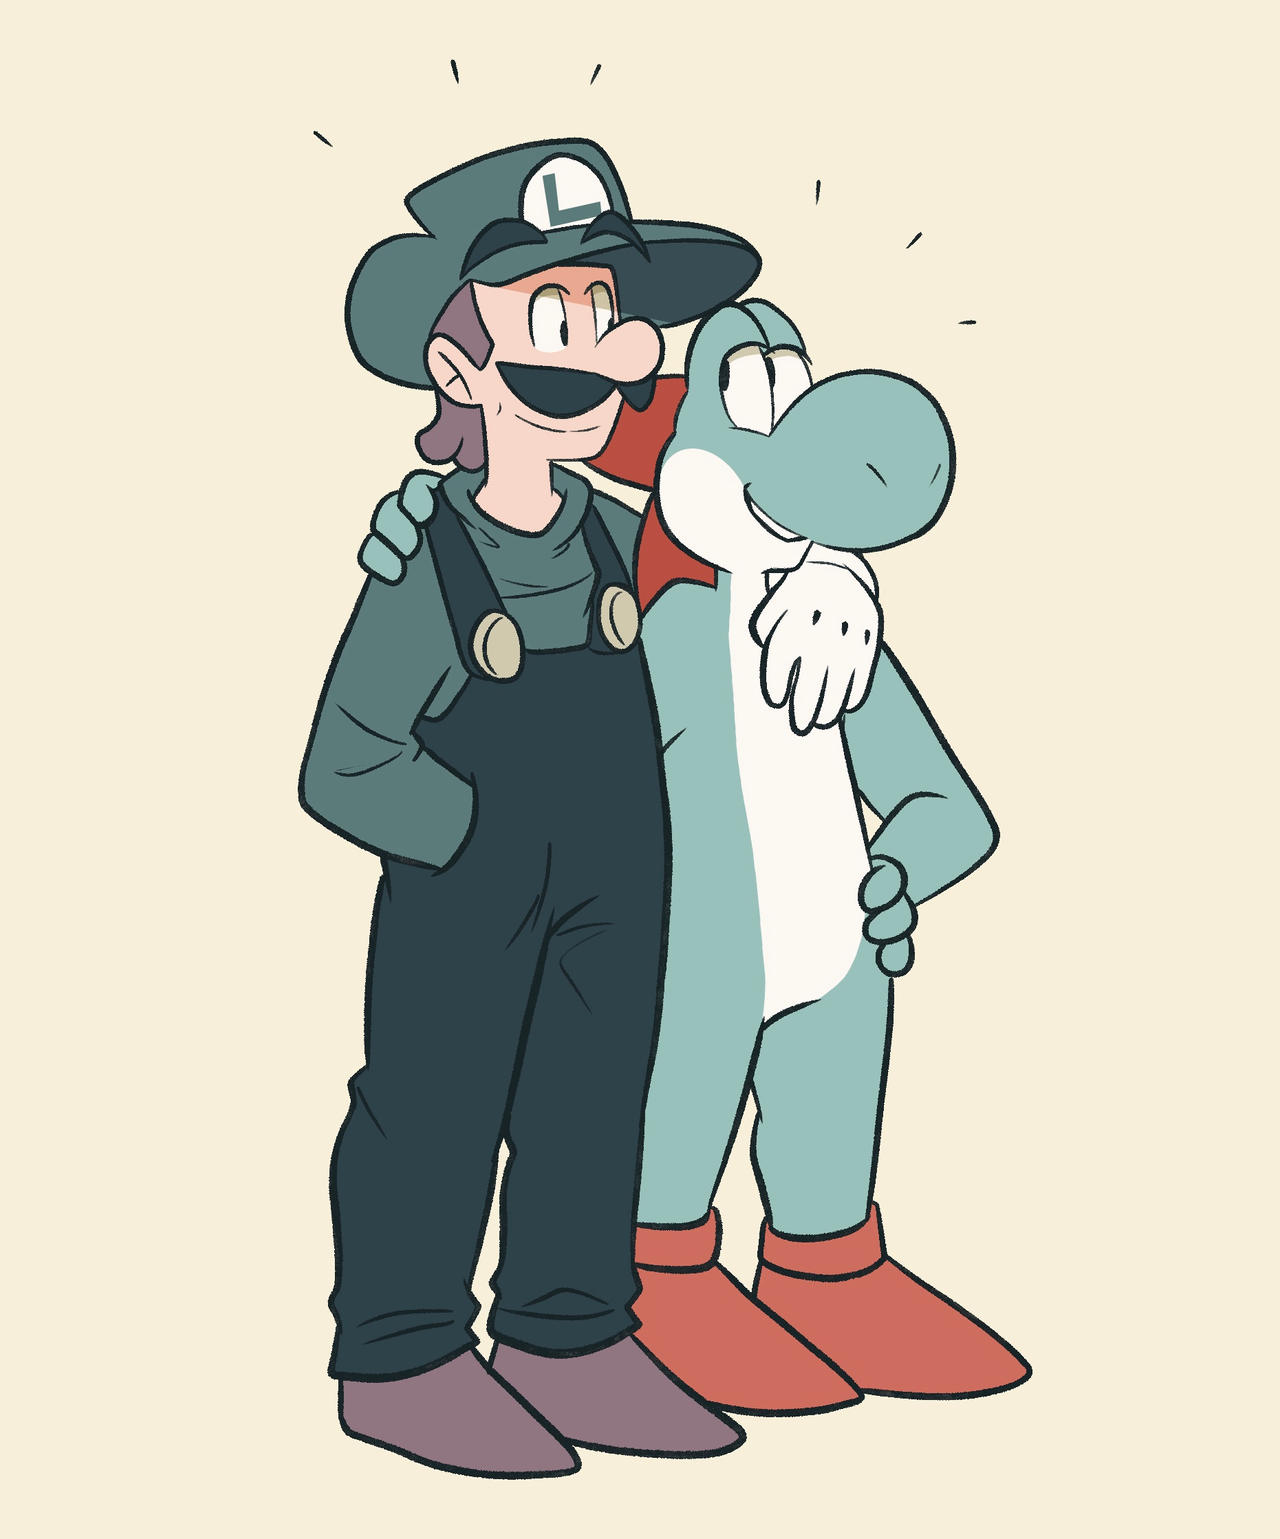 Mario Characters Chaos! by LuigiYoshi2210 on DeviantArt